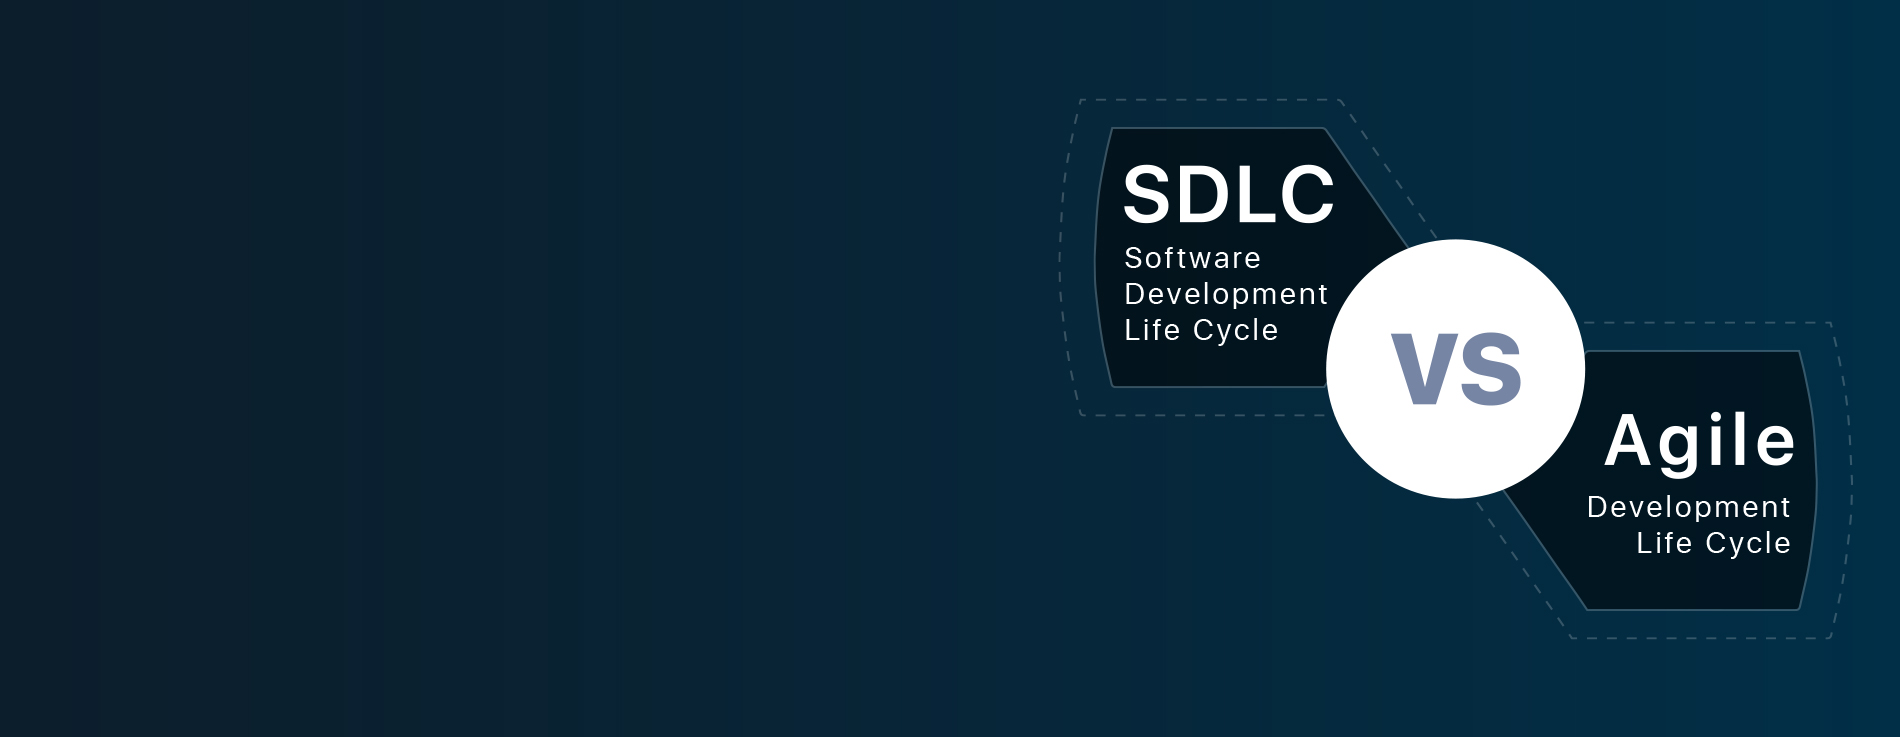 SDLC-vs-Agile-Development